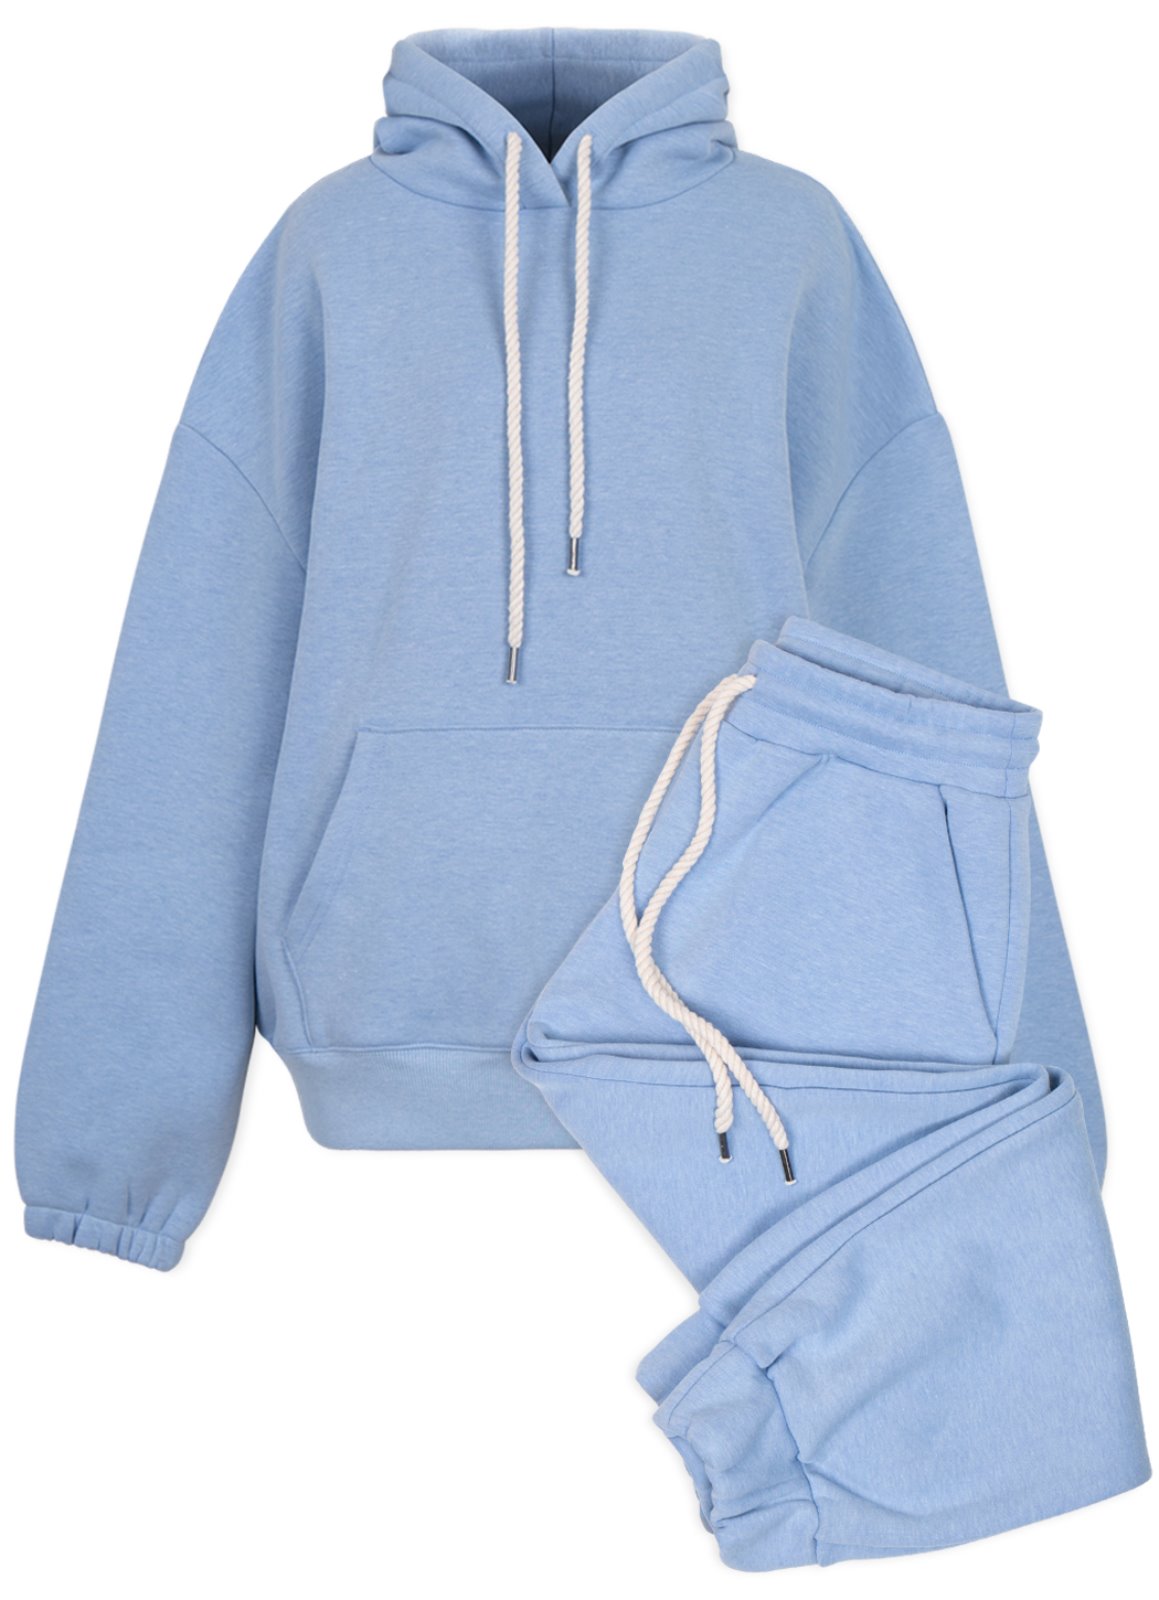 W.Winter hoodie set up (기모)  Pale blue